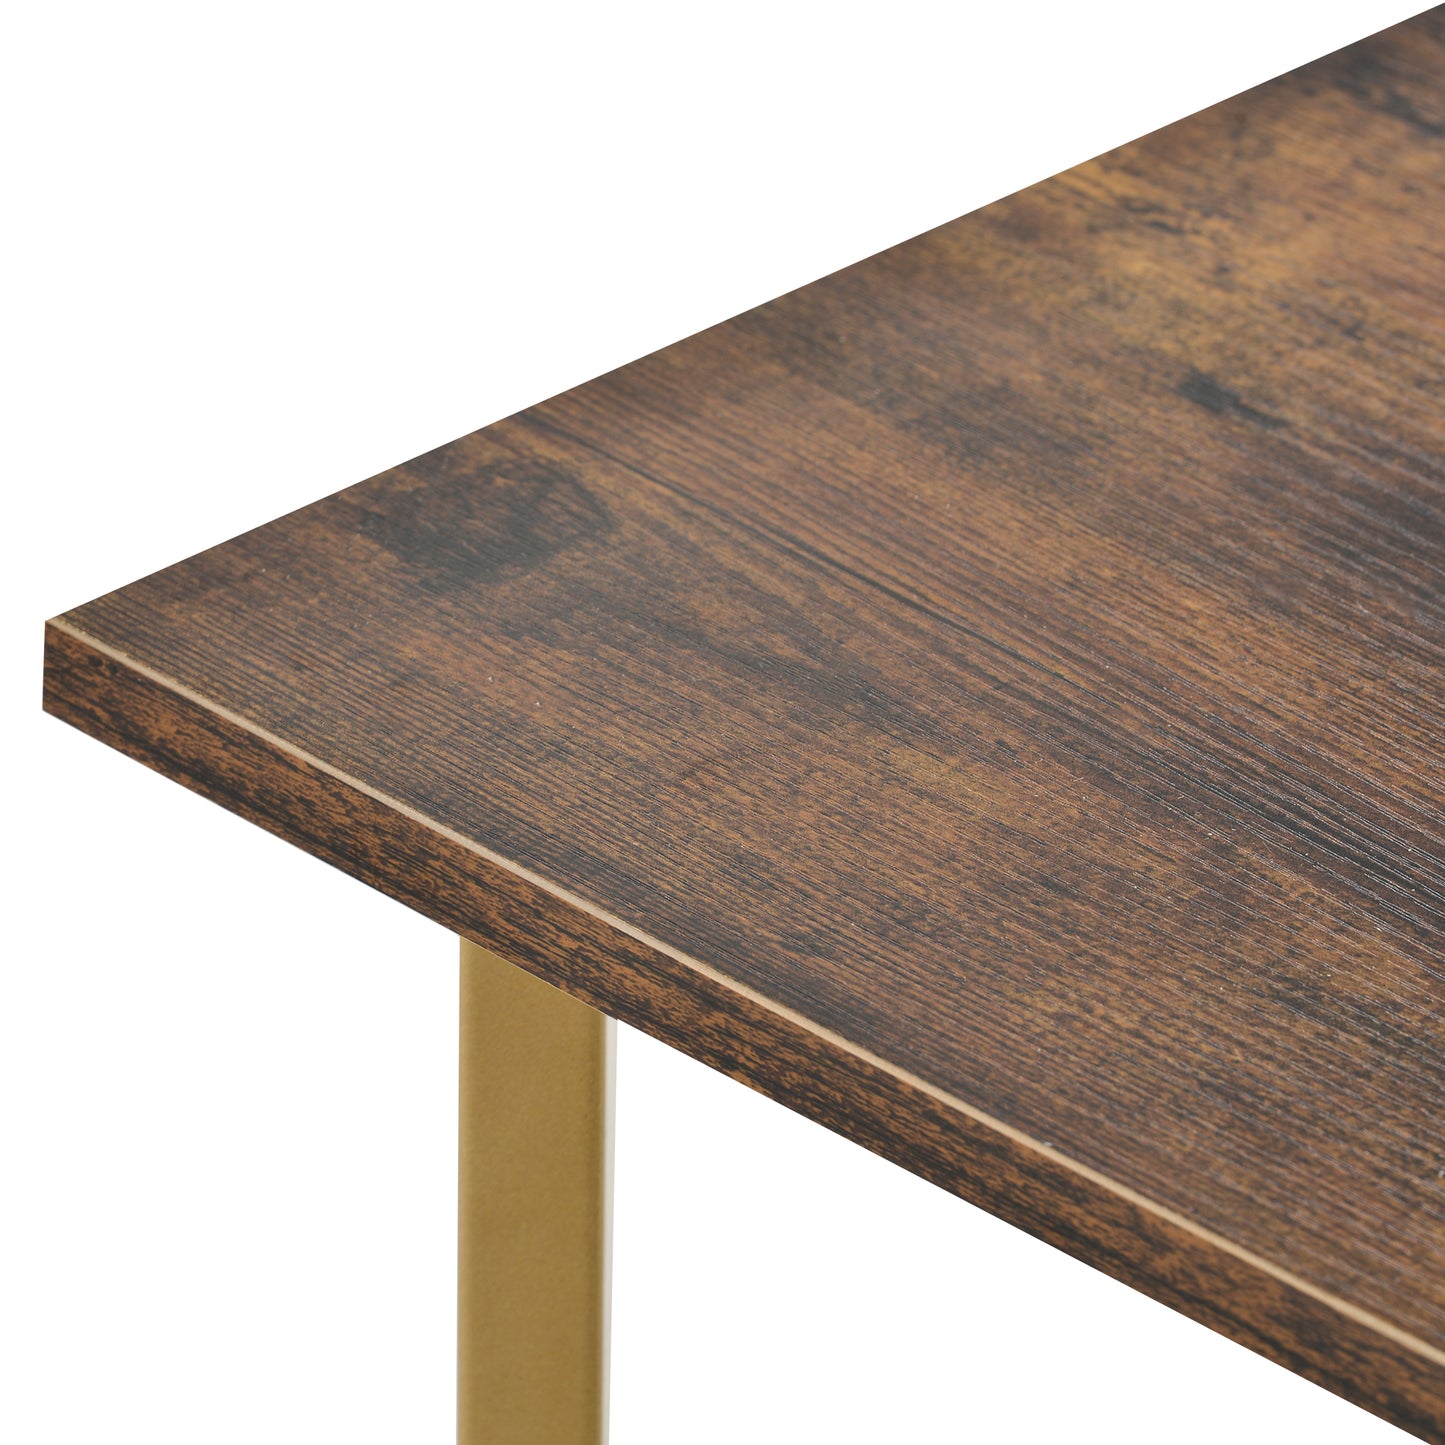 Modern Rectangle Wooden Coffee Table, Stylish X-leg base